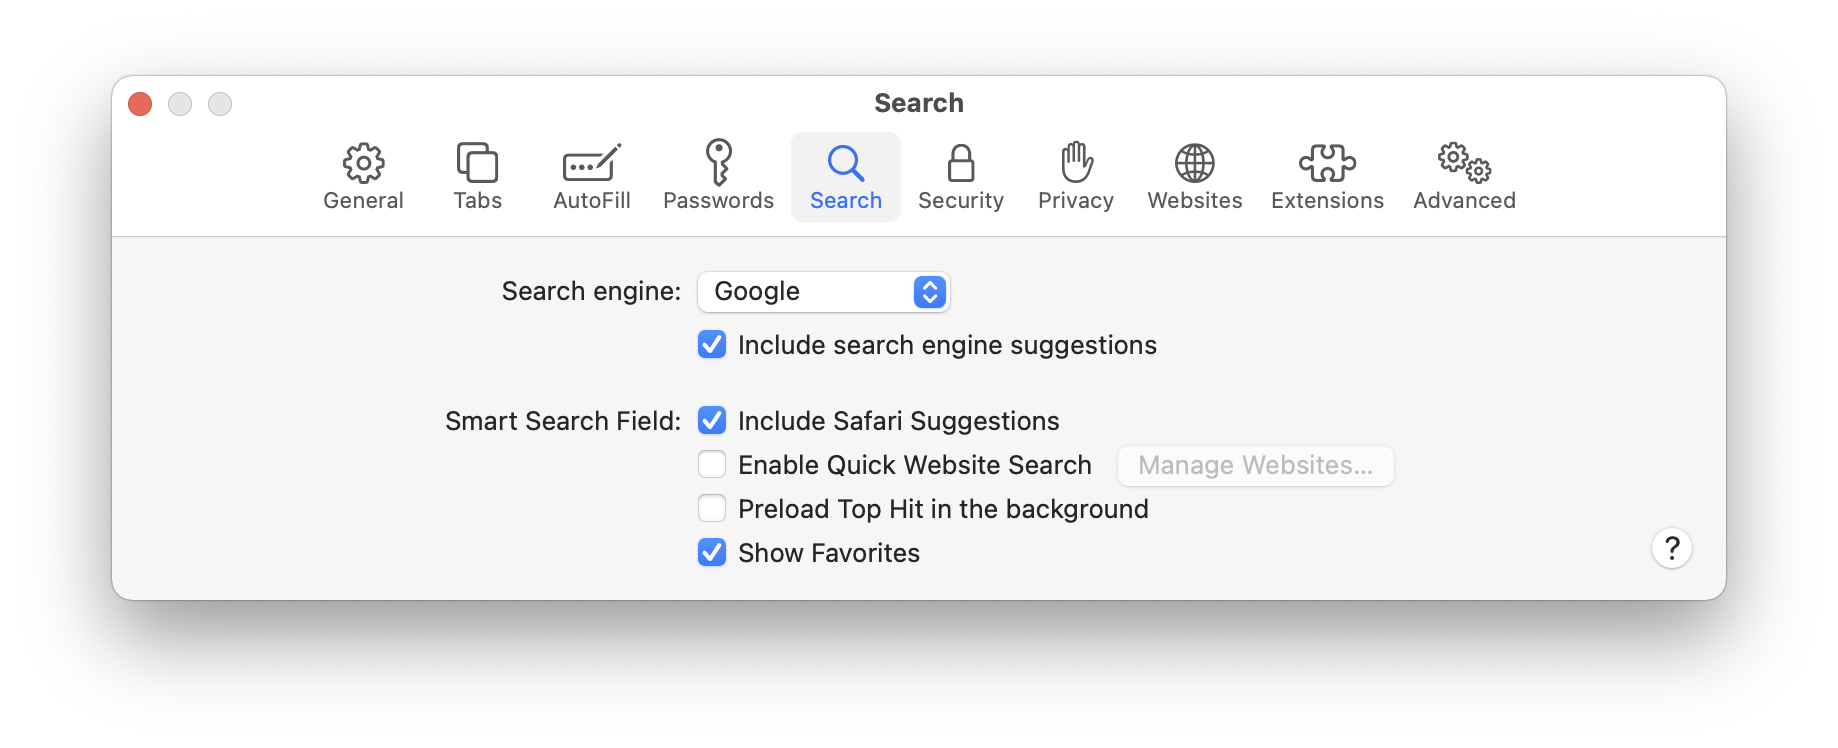 Is searching on Safari the same as Google?